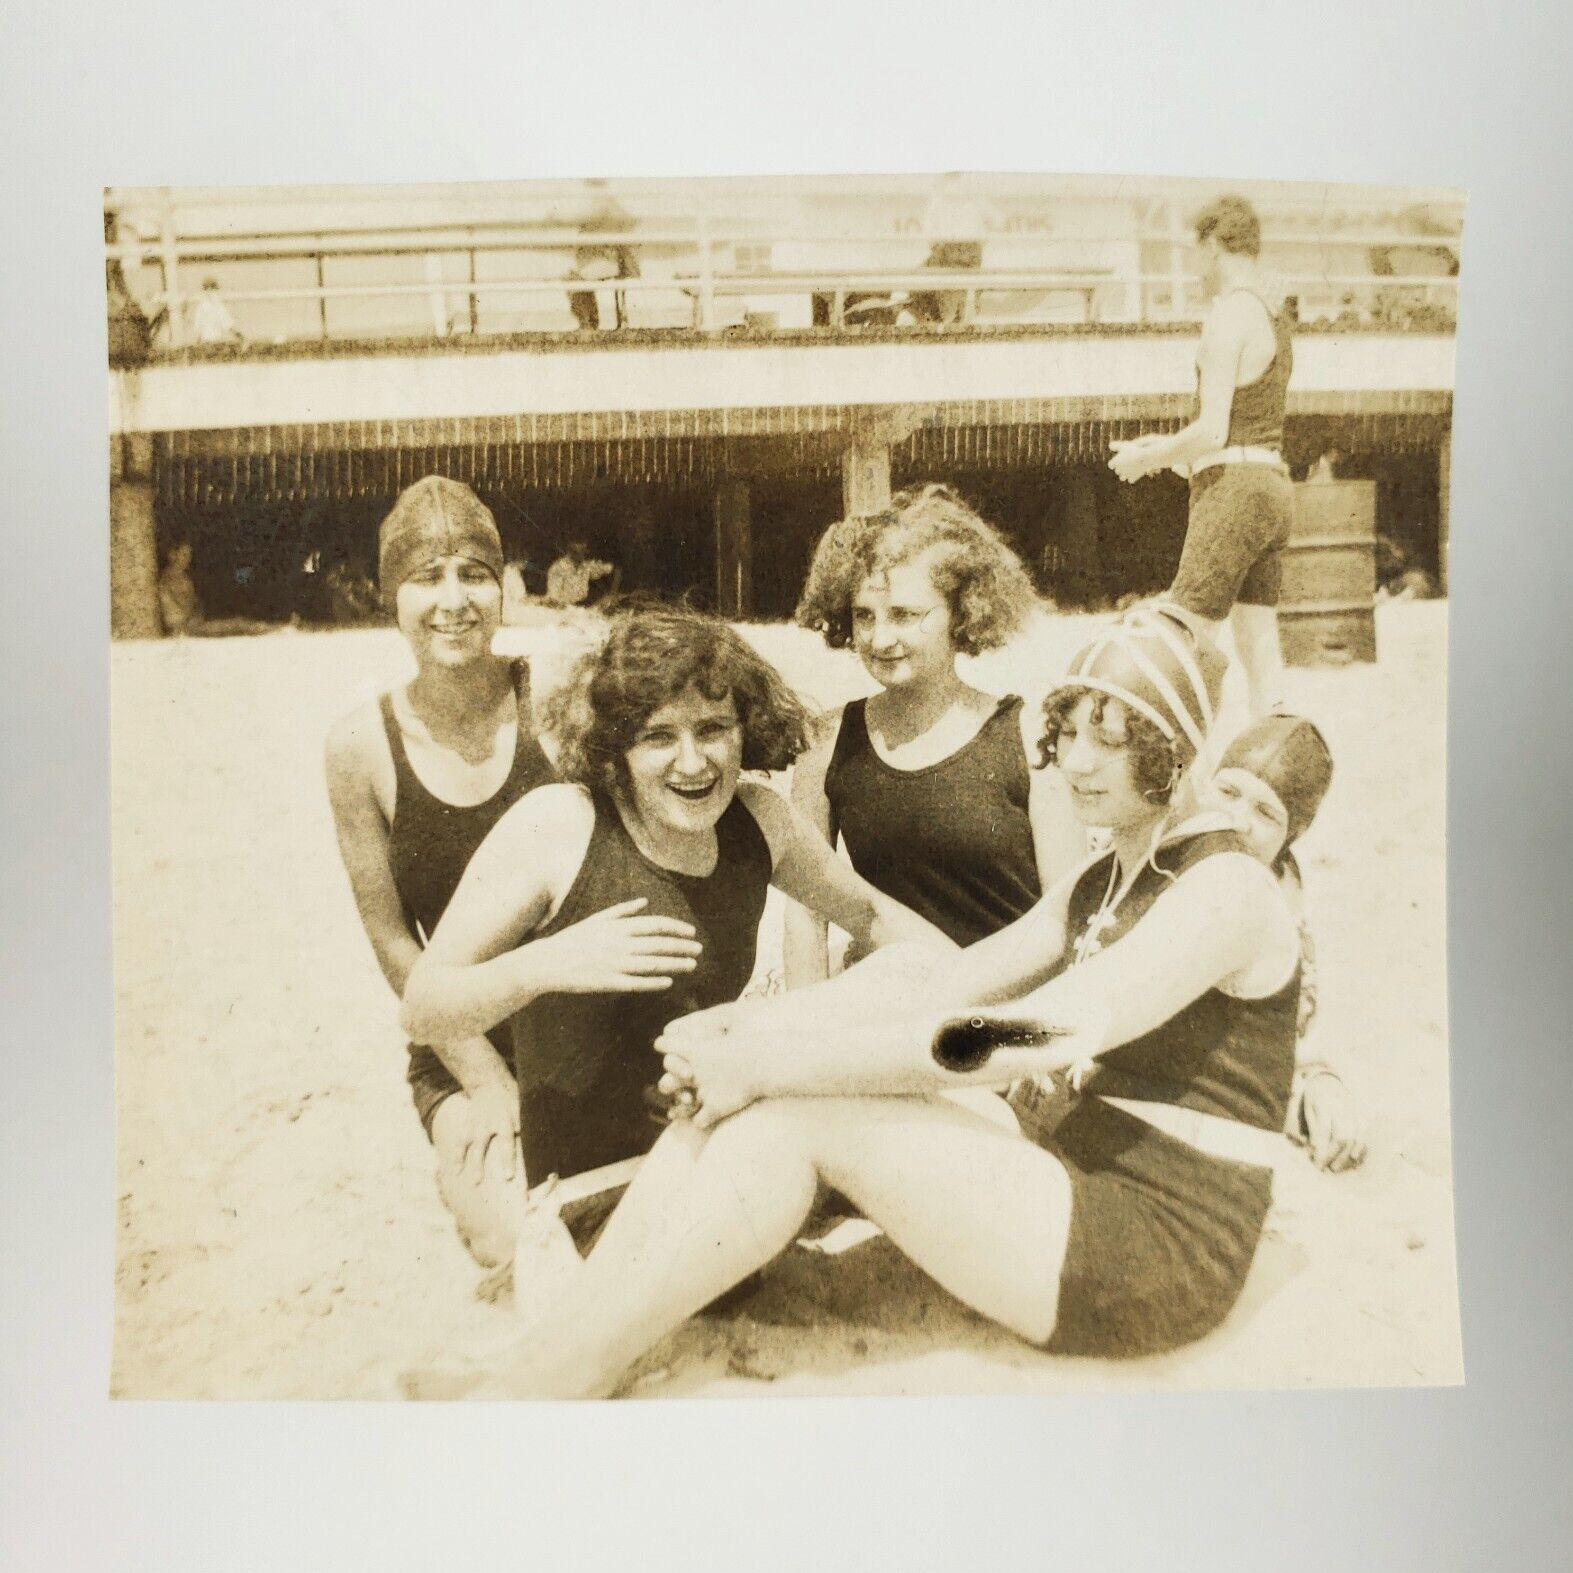 Laughing Bathing Beauty Girls Photo c1915 Swimsuit Women Beach Cuddling A3567